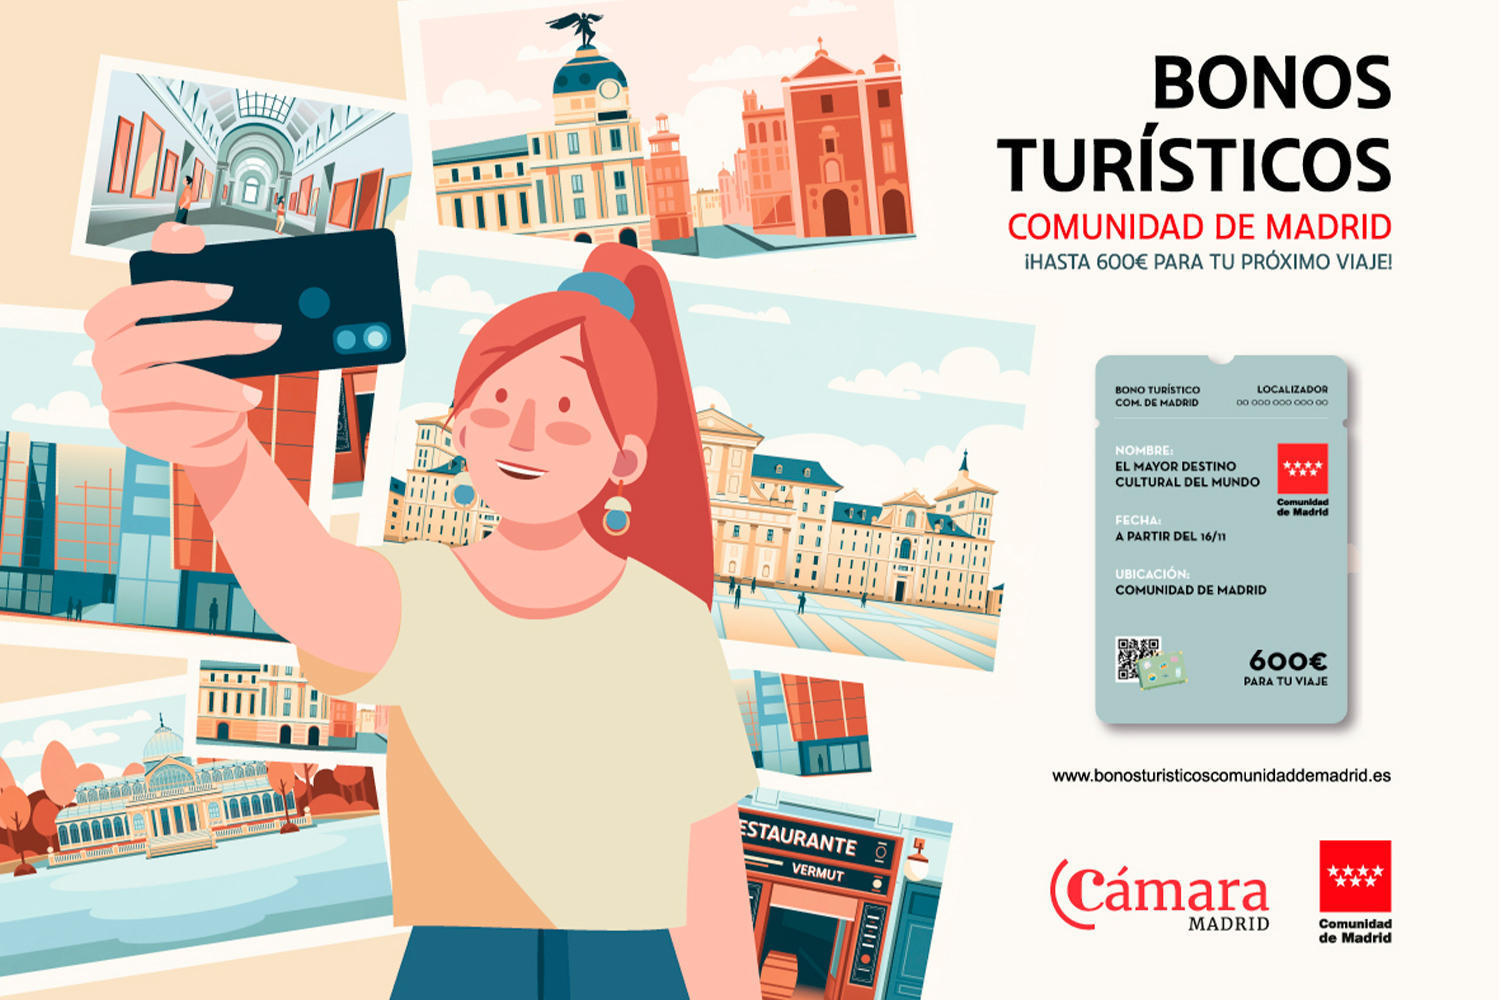 Madrid tourist vouchers poster